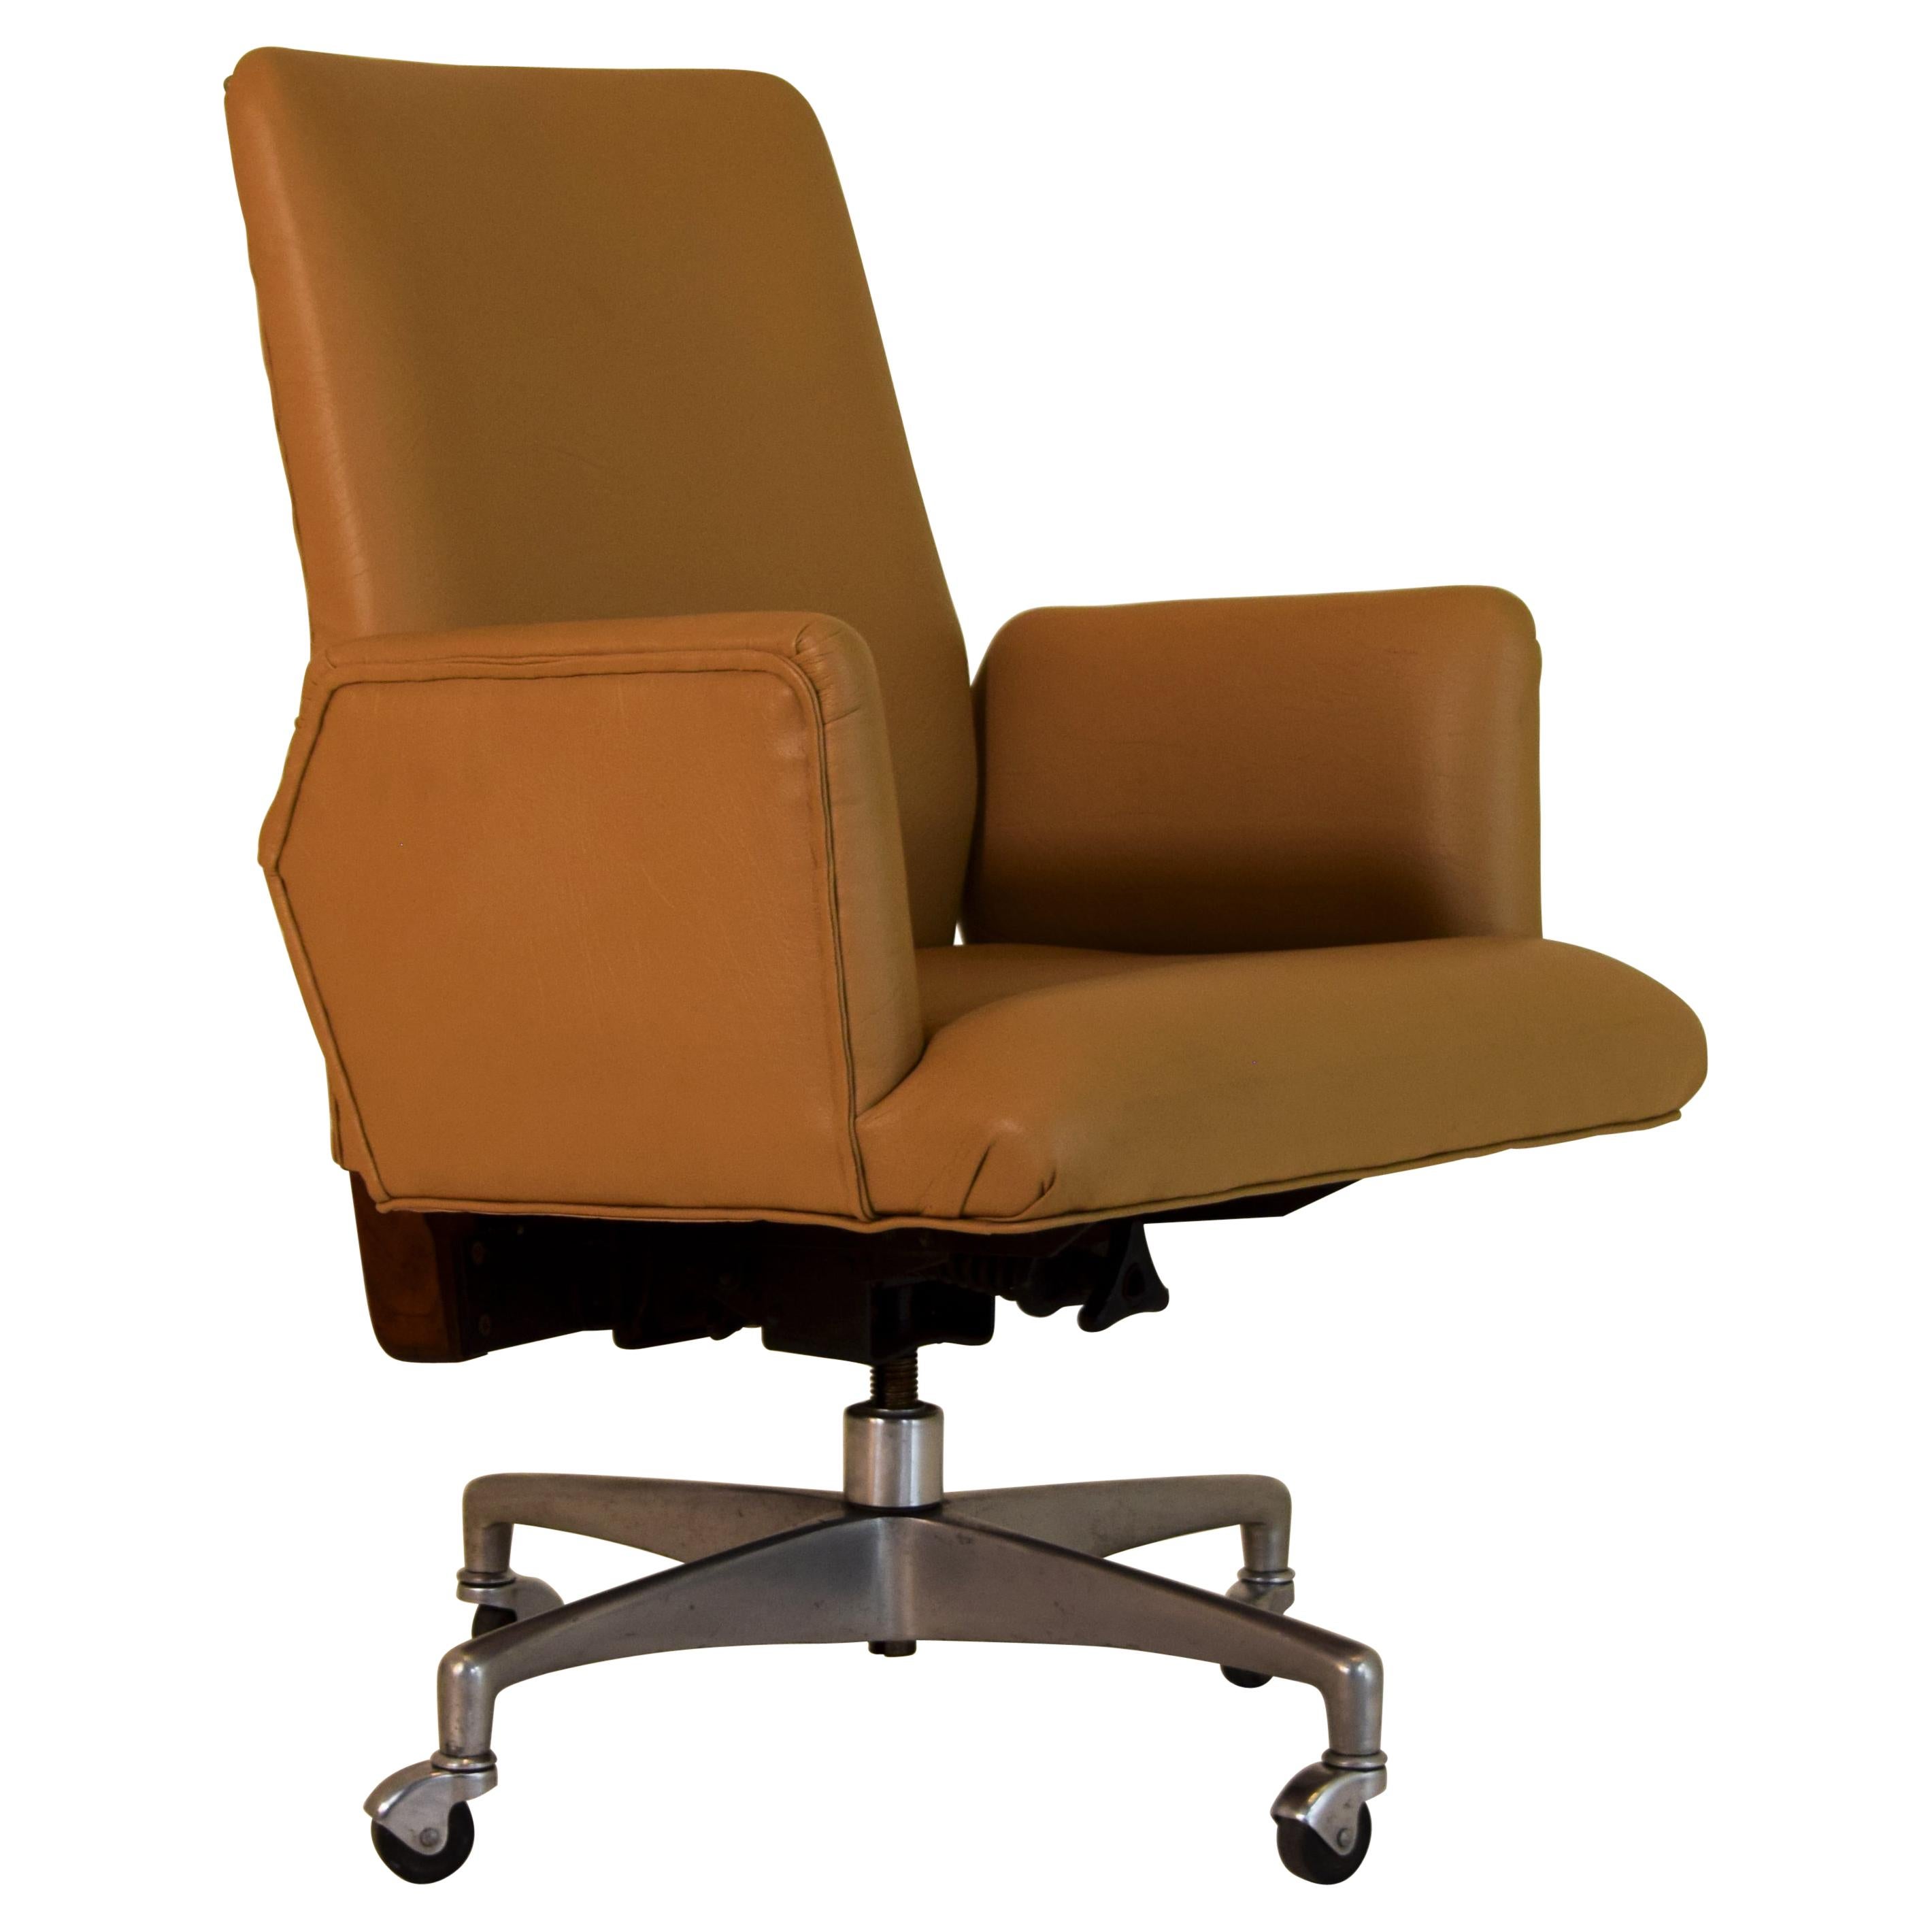 Premium Executive Swivel Tilt Executive Office Chair